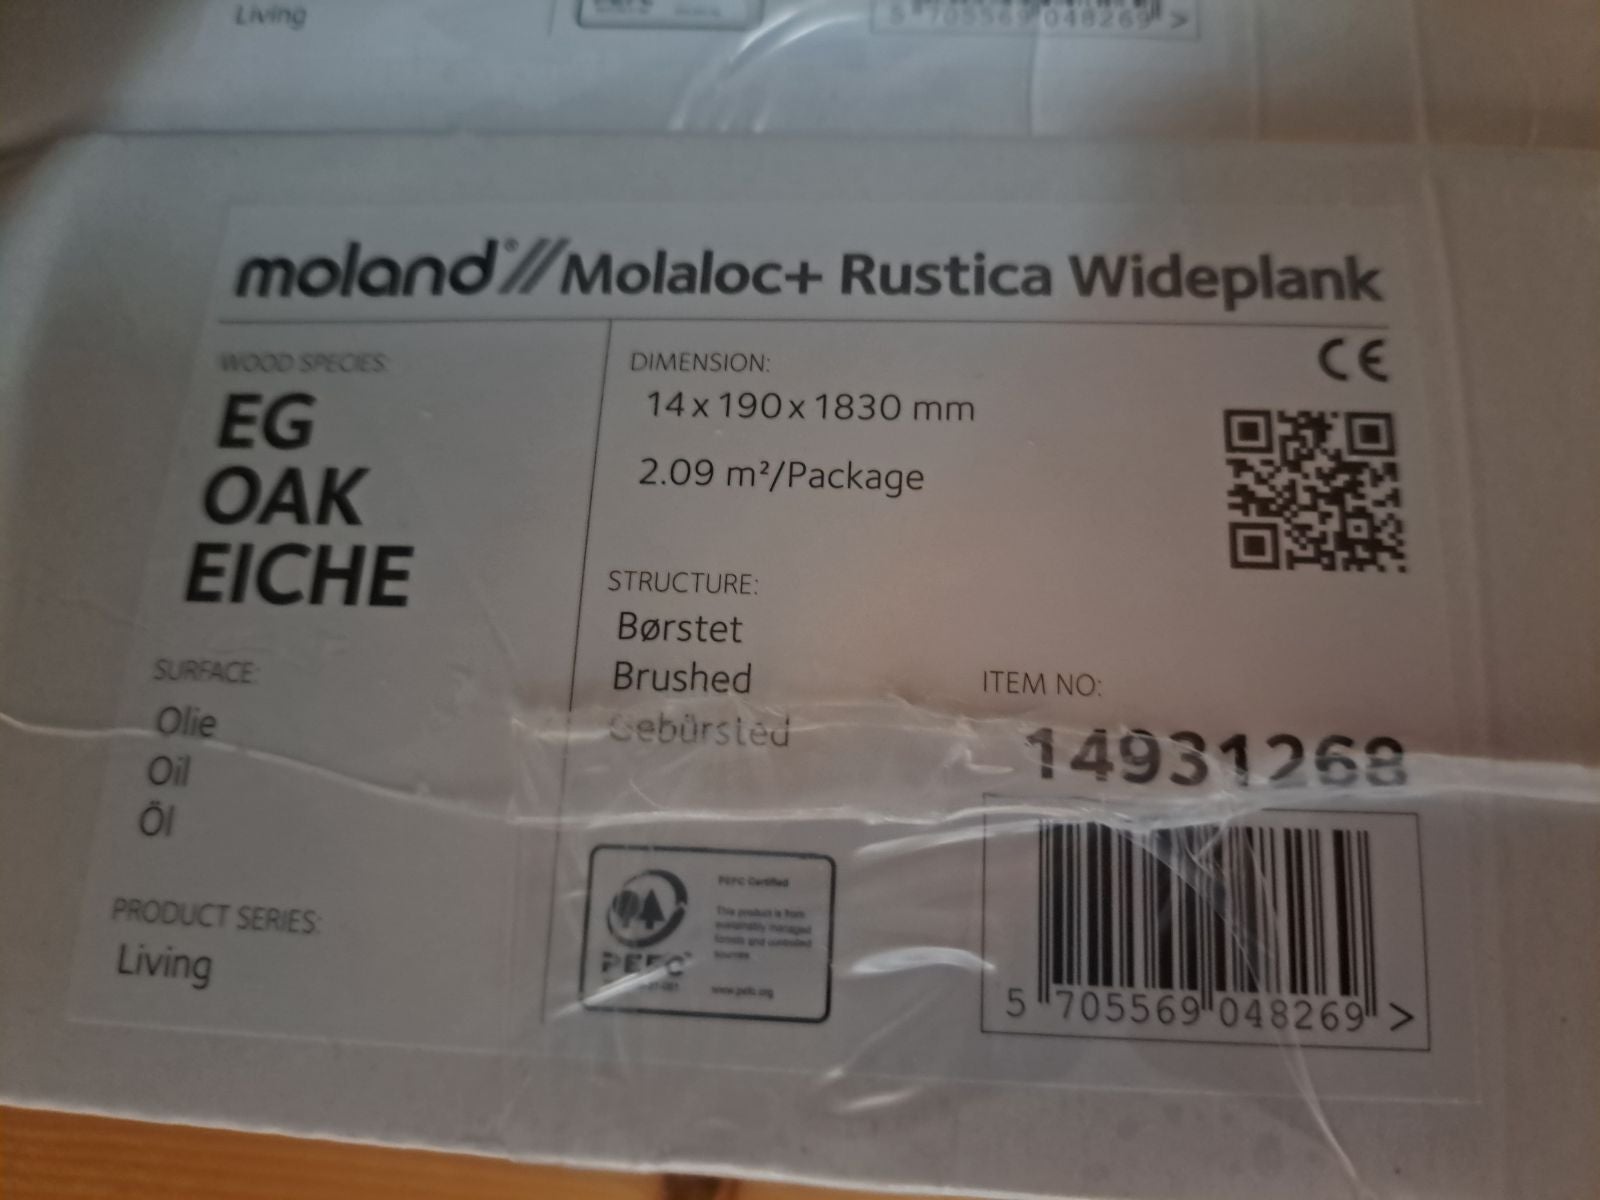 Moland Molaloc+ Rustica Wideplank